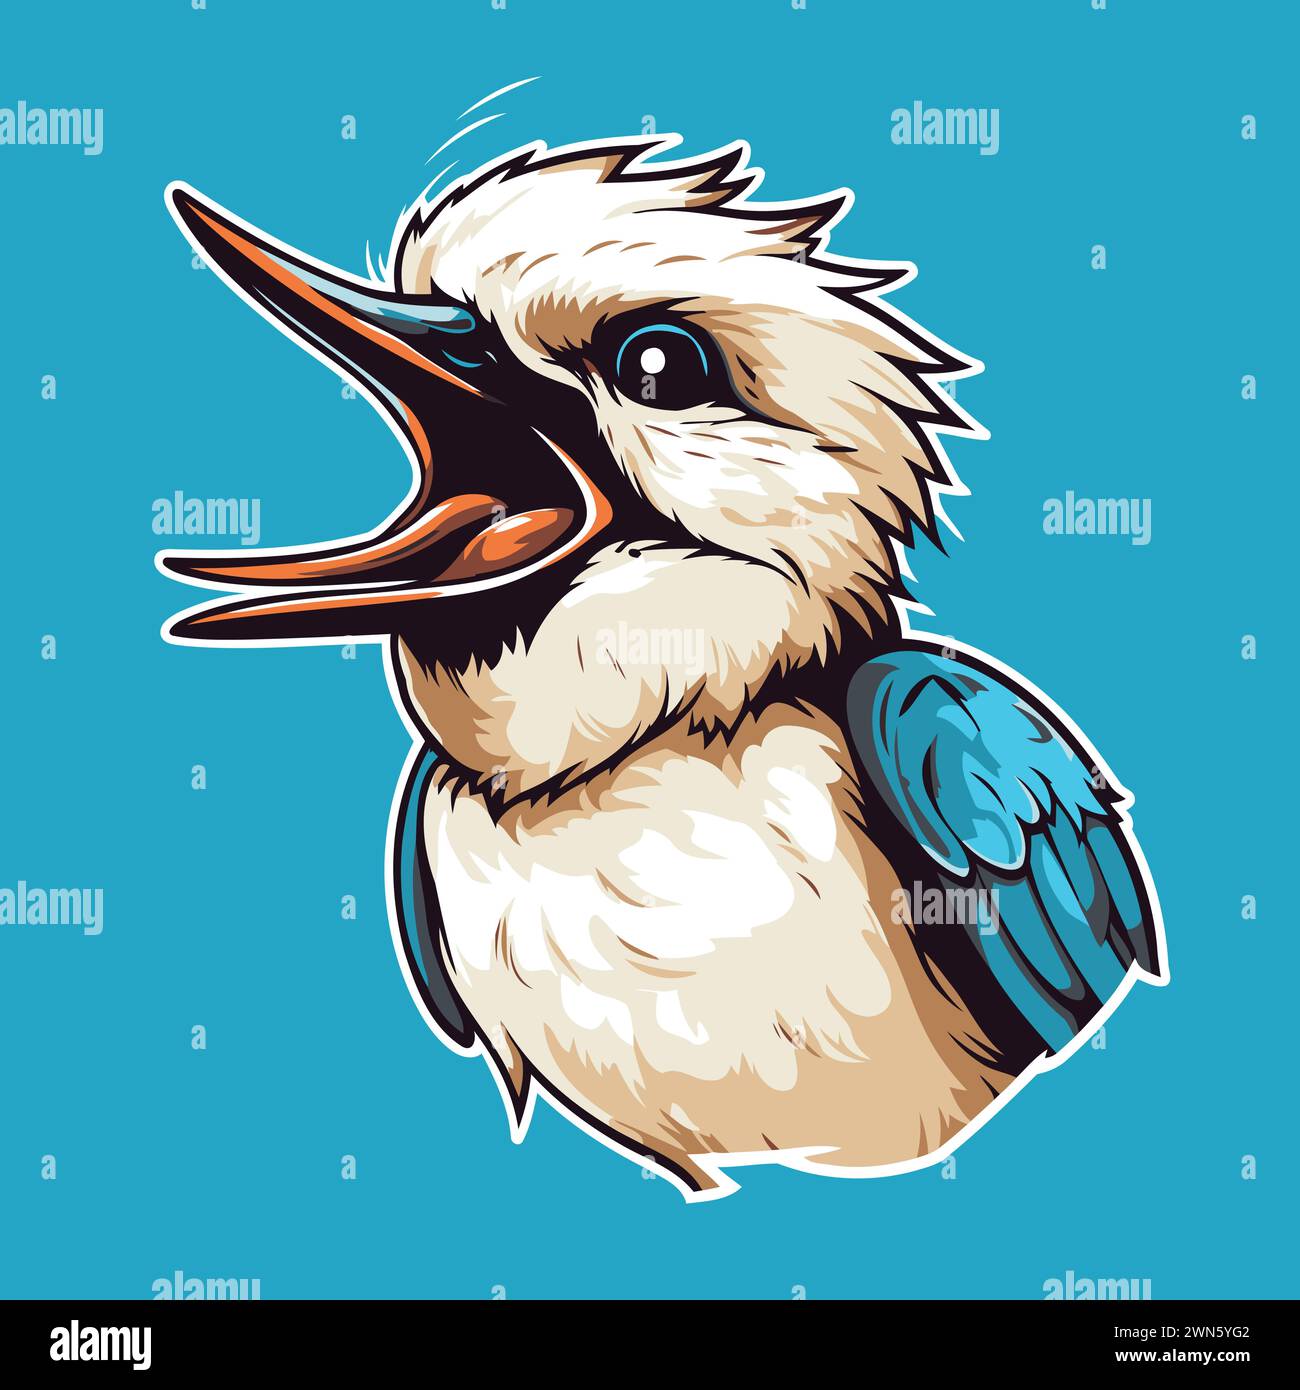 Kookaburra bird with open mouth. Vector illustration. Stock Vector